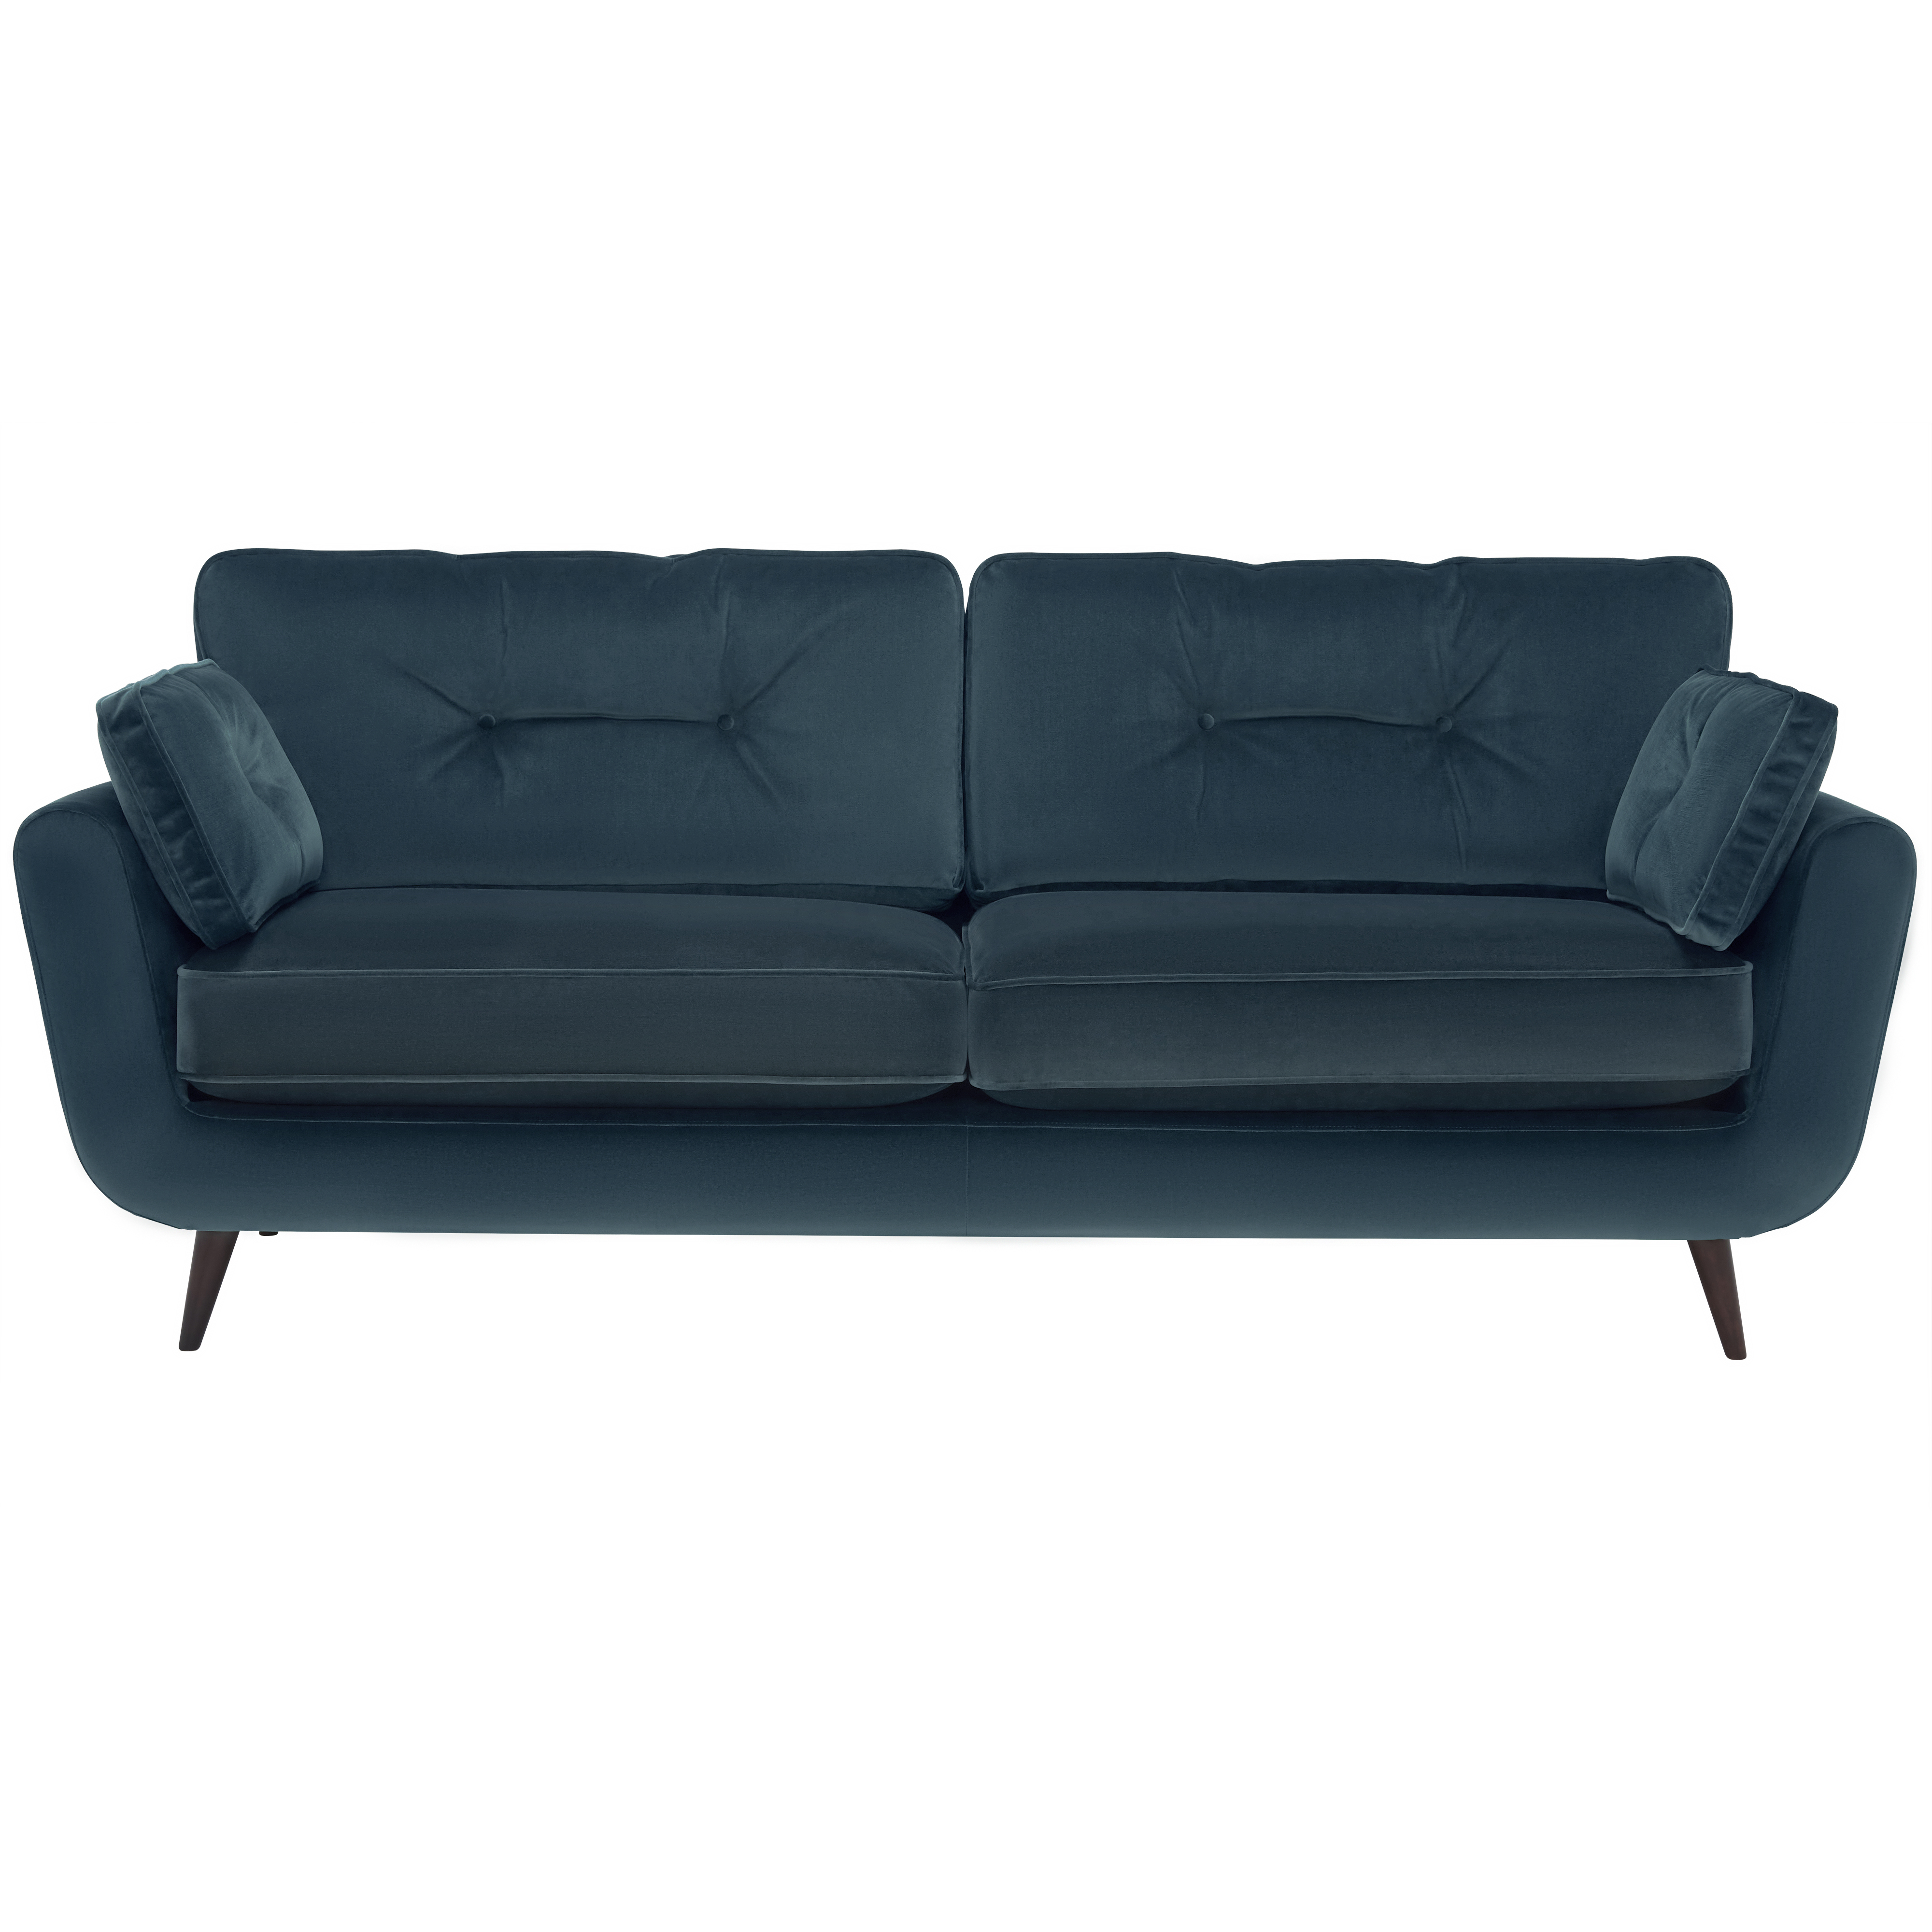 Lotus Large Sofa, Blue Fabric | Barker & Stonehouse